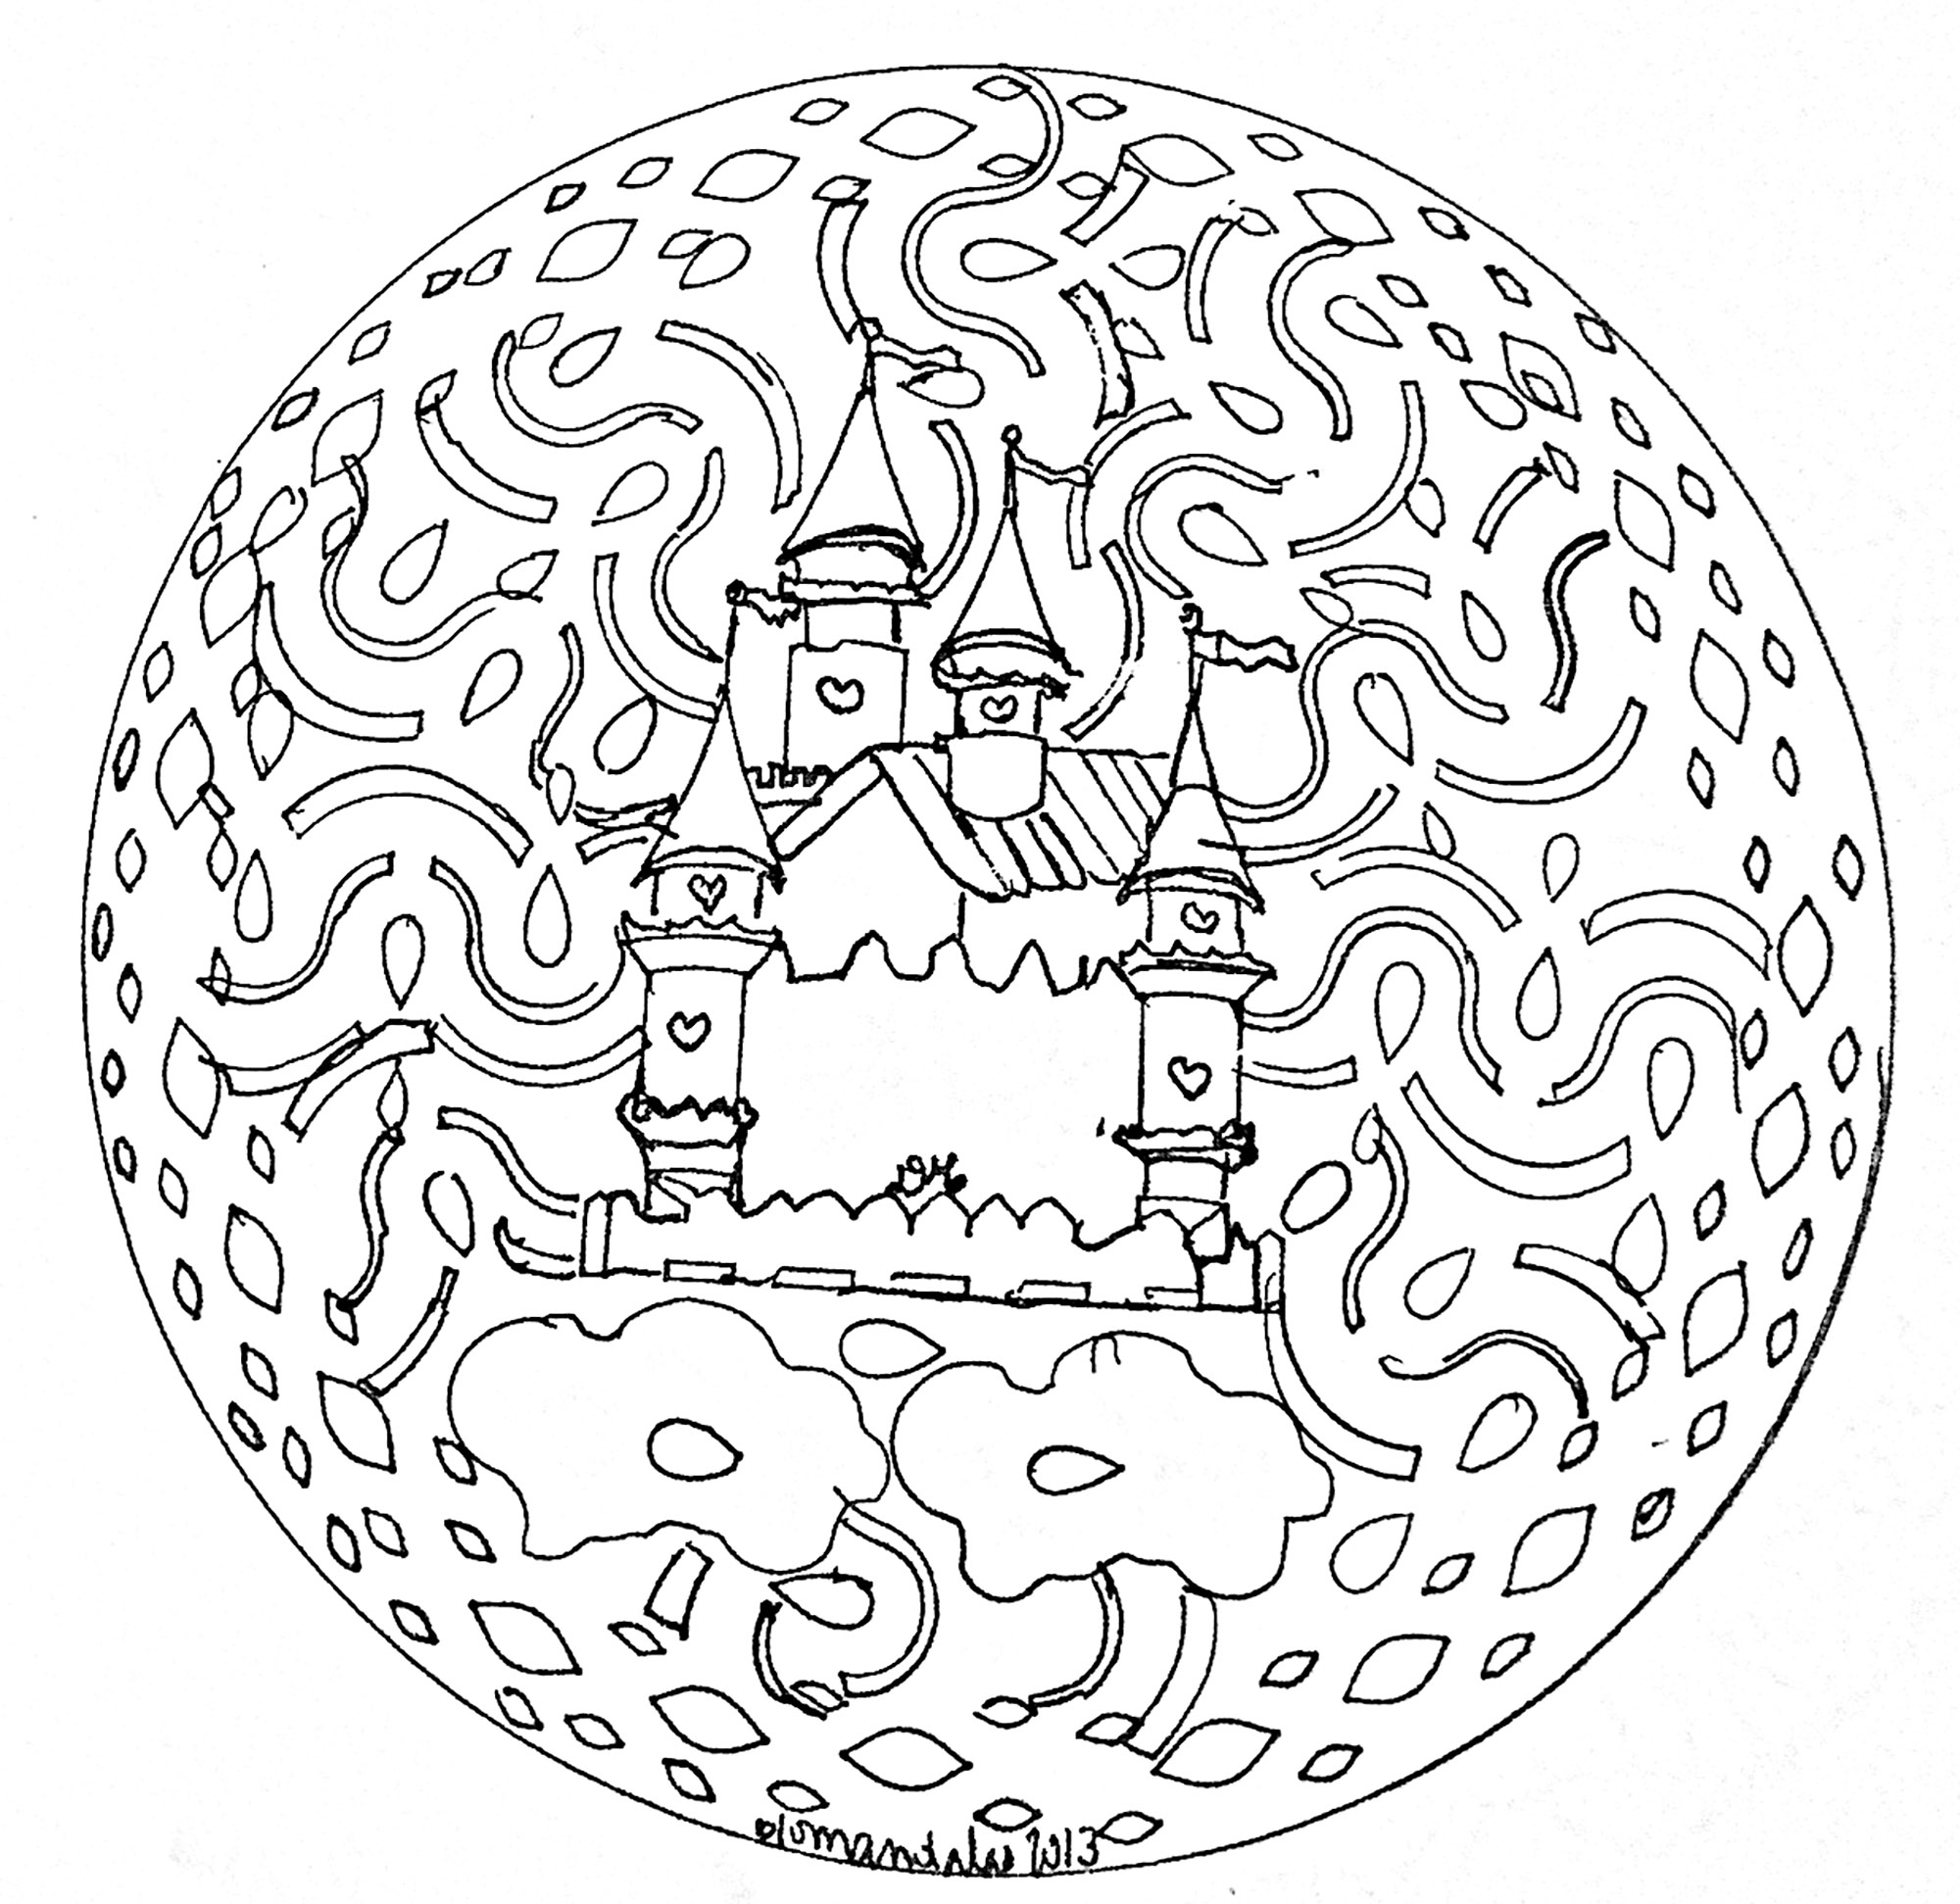 Mandala with castle - Image with : Castle, Artist : Domandalas